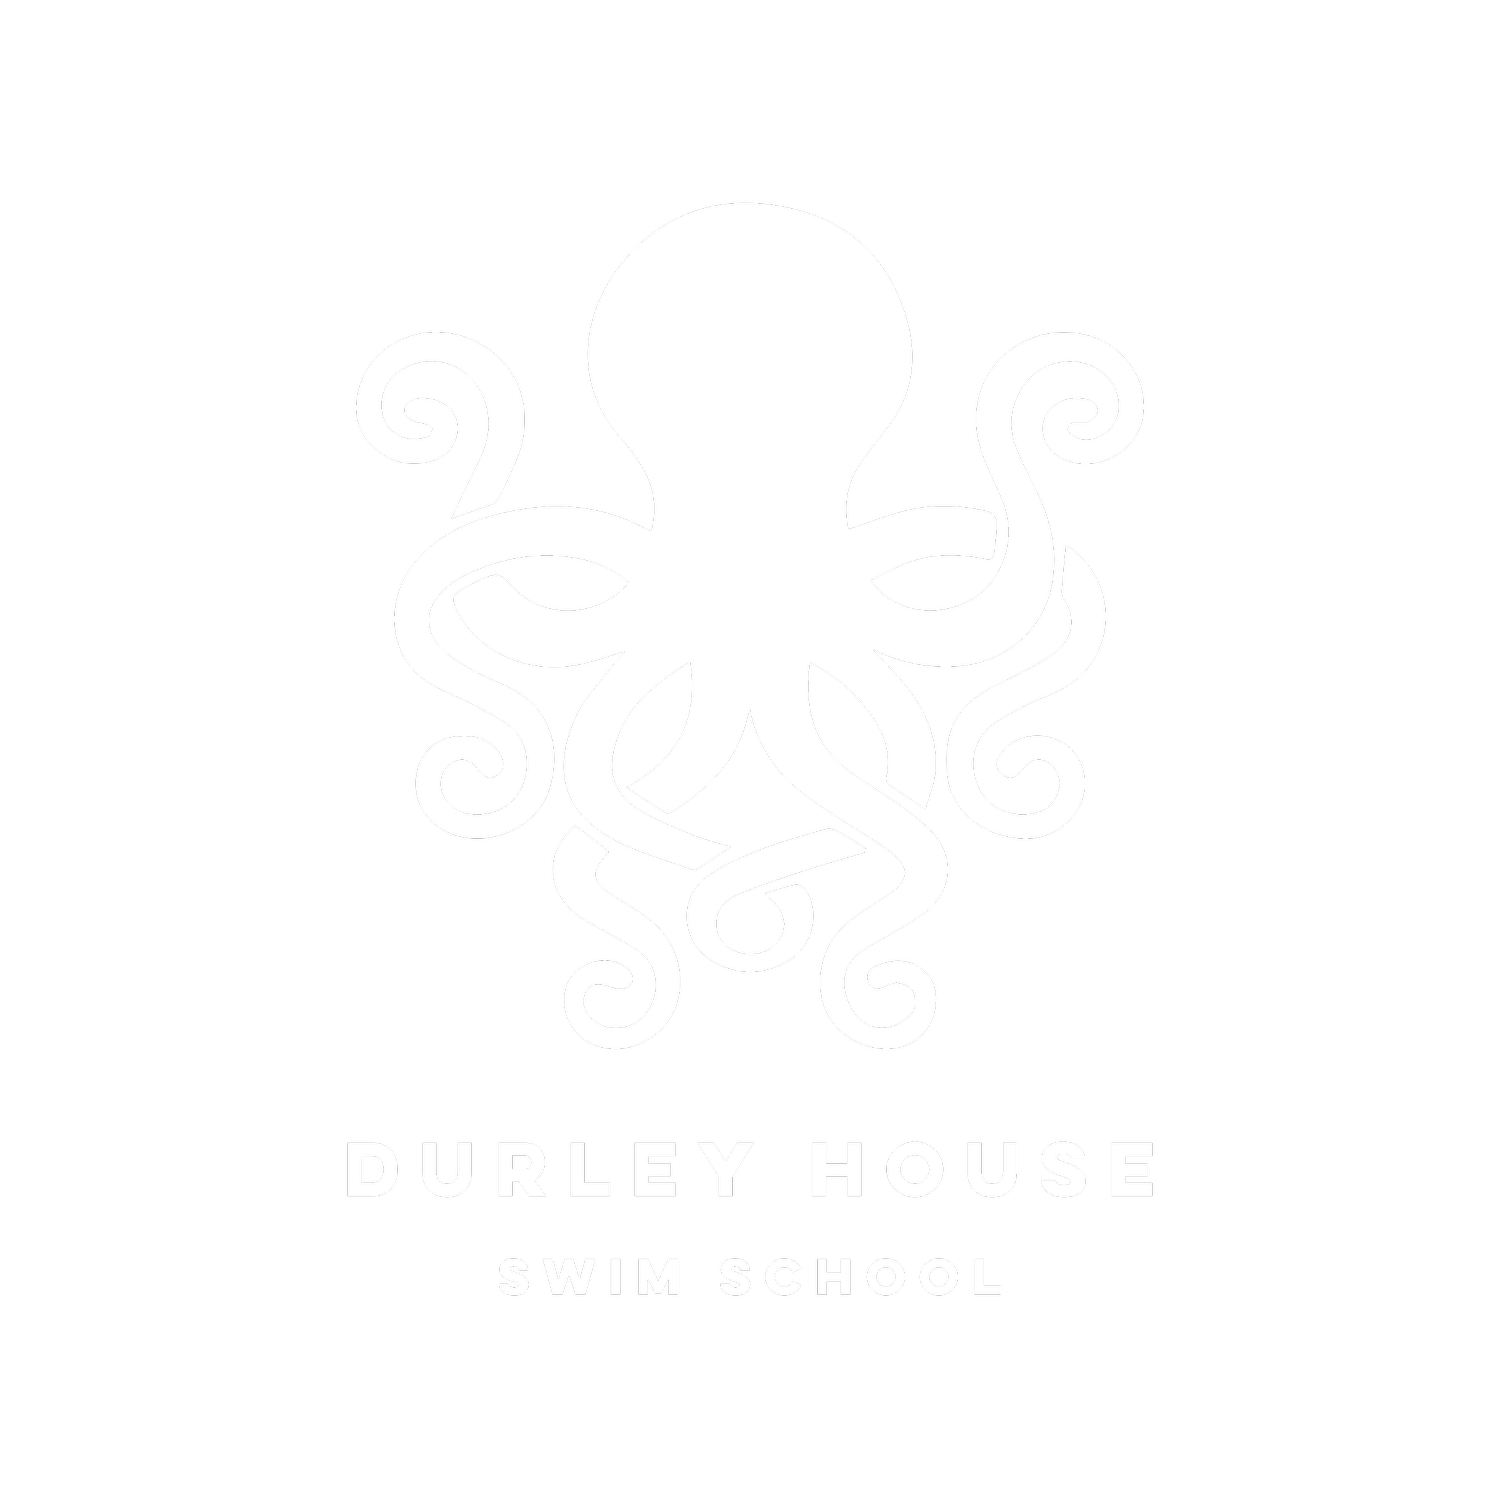 Durley House Swim School